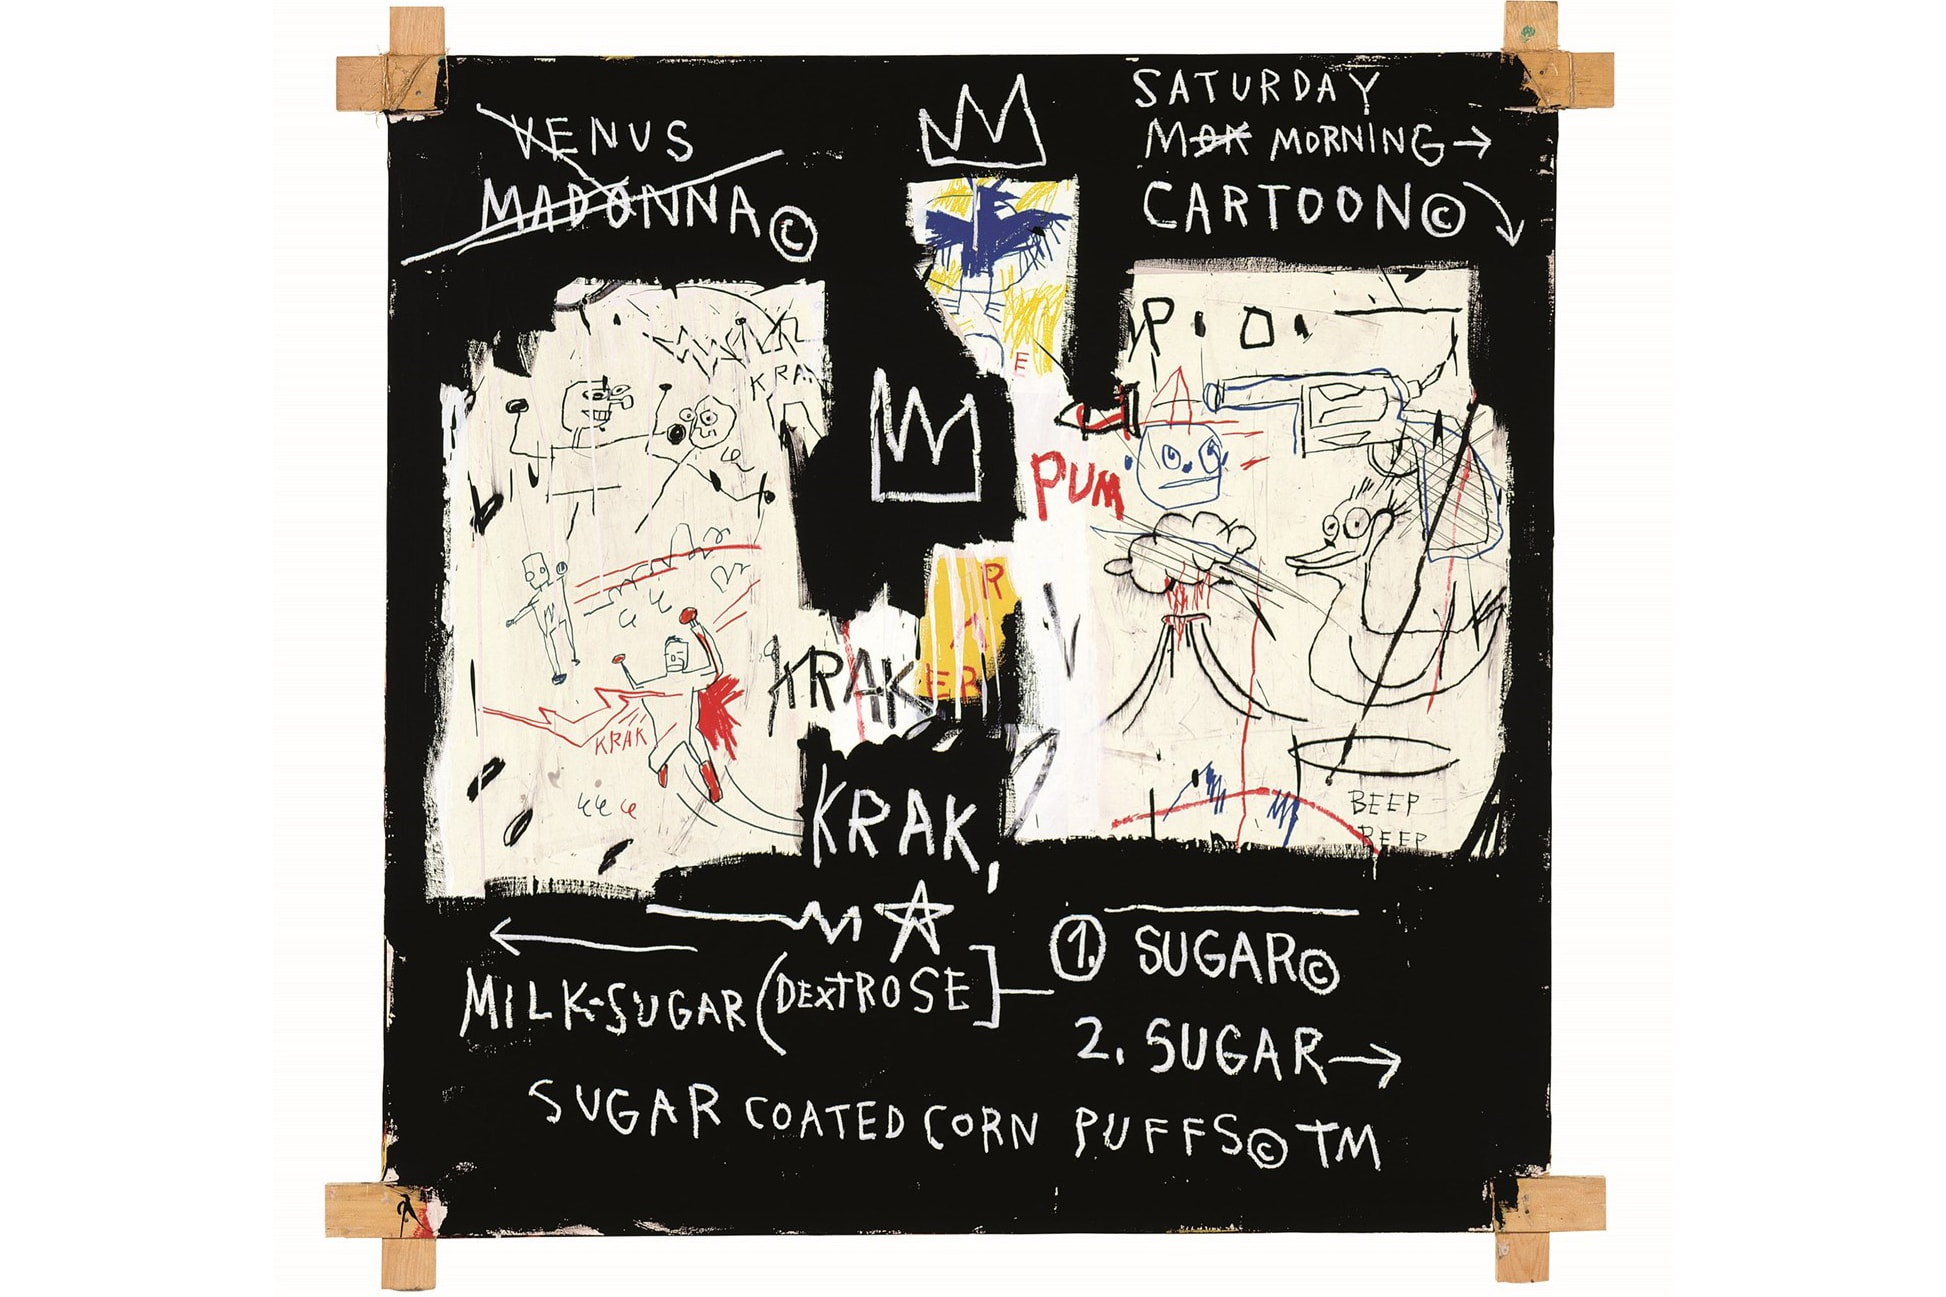 Jean Michel-Basquiat Barbican London Boom For Real